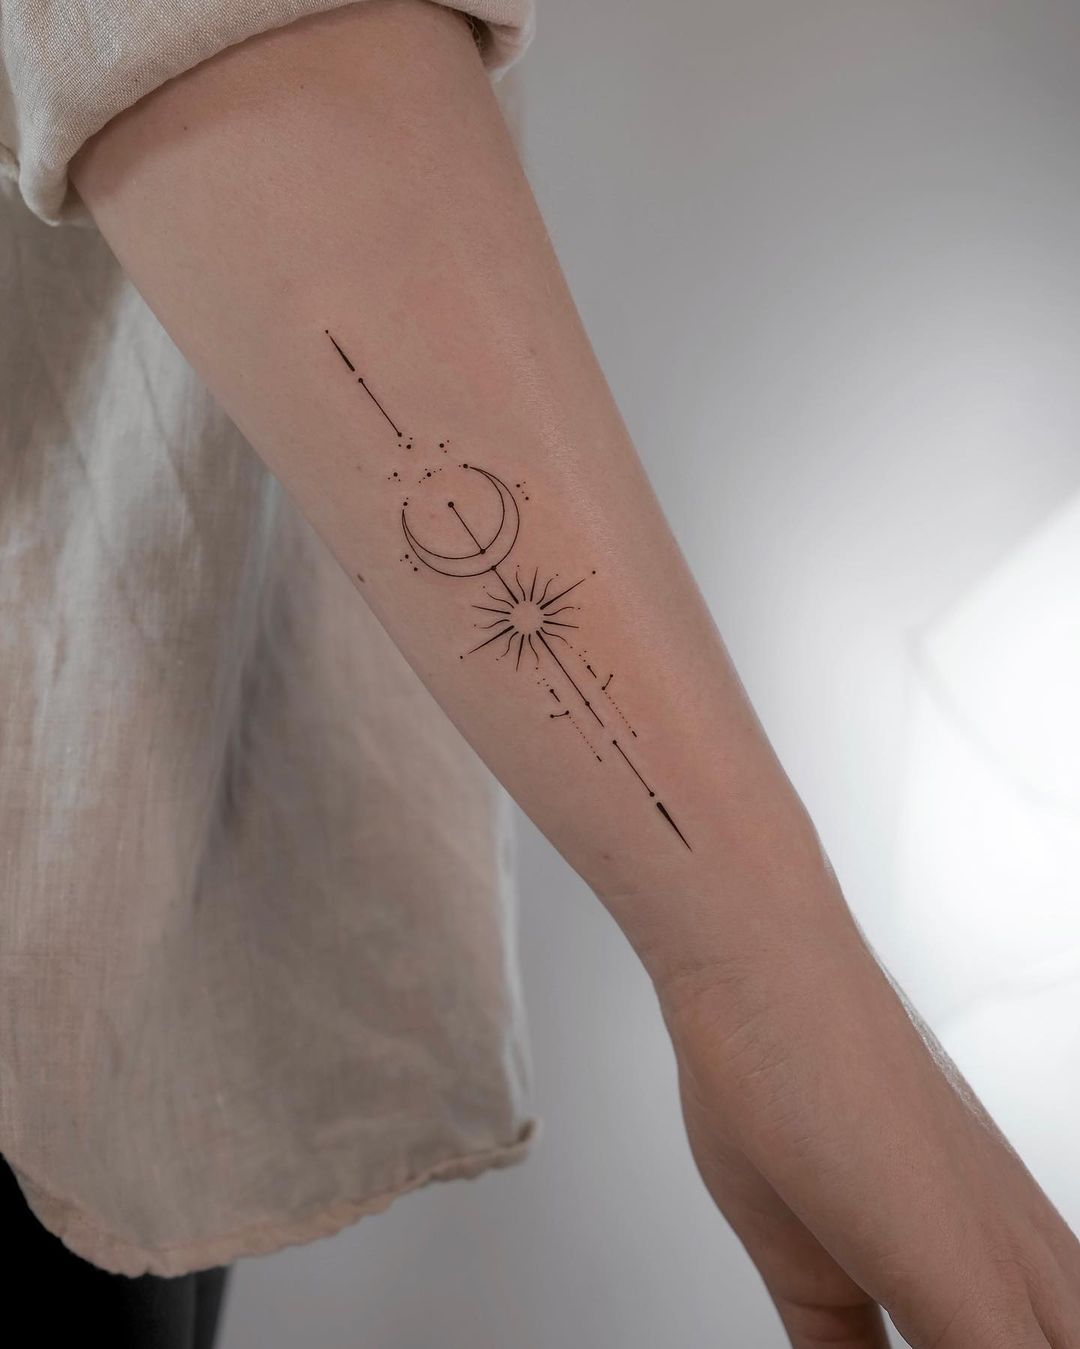 Mini sun and moon tattoo design by monochrom.ink